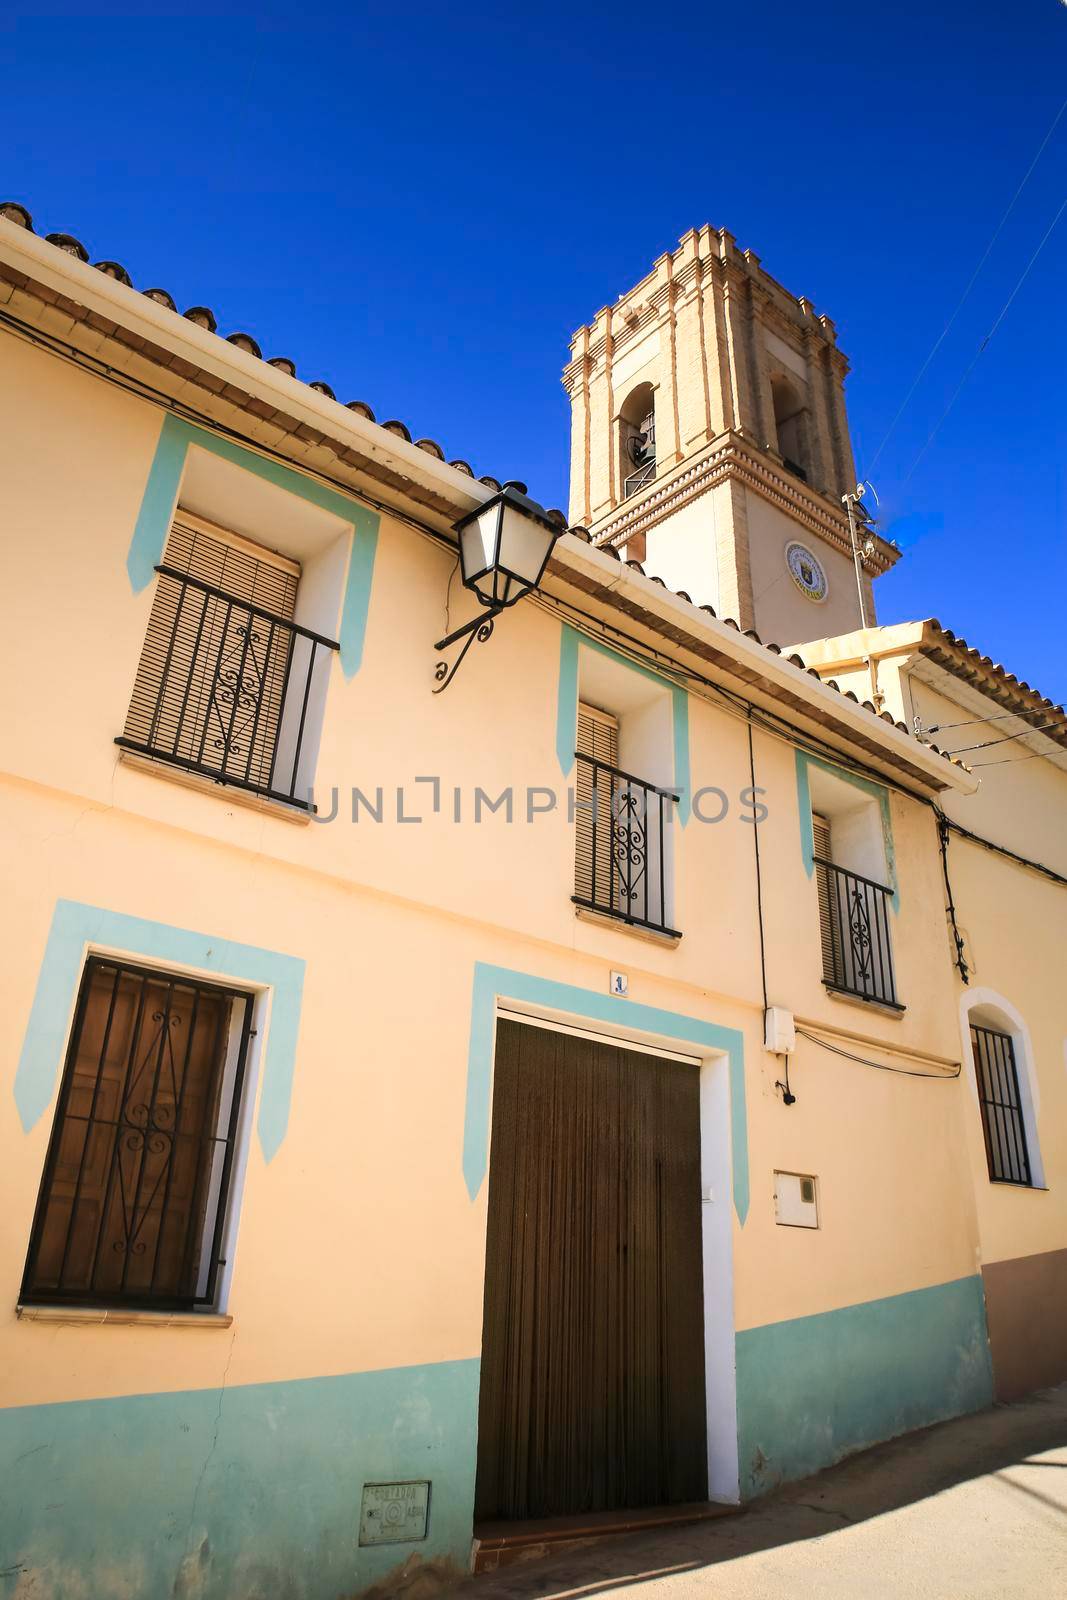 Bolulla, Alicante, Spain- February 6, 2022: Facades of Bolulla village and San Jose church tower in the background